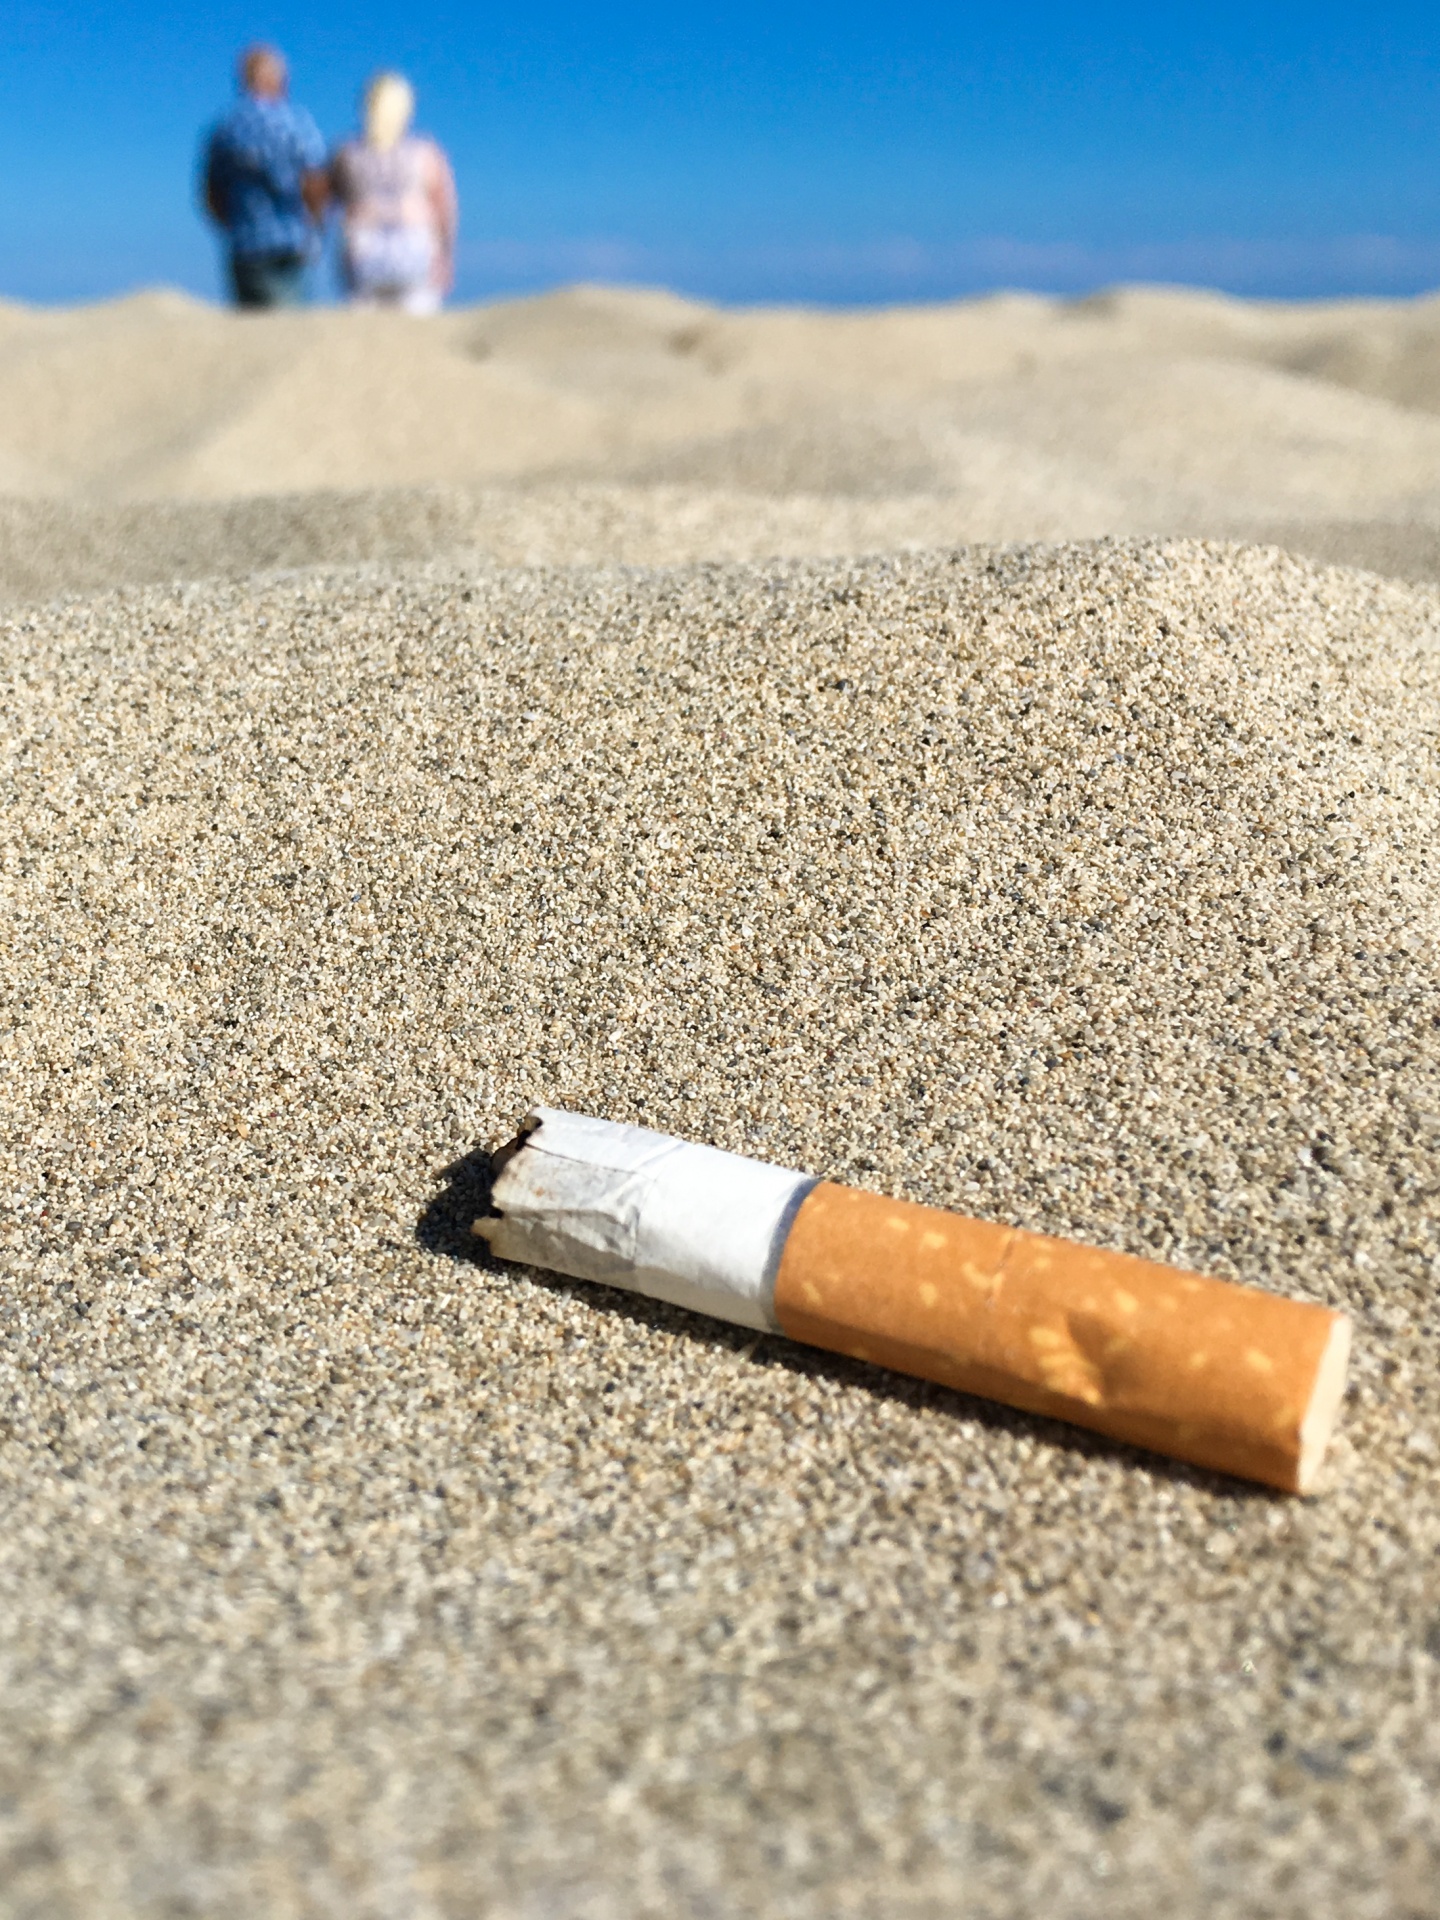 Cigarette Butt On The Beach